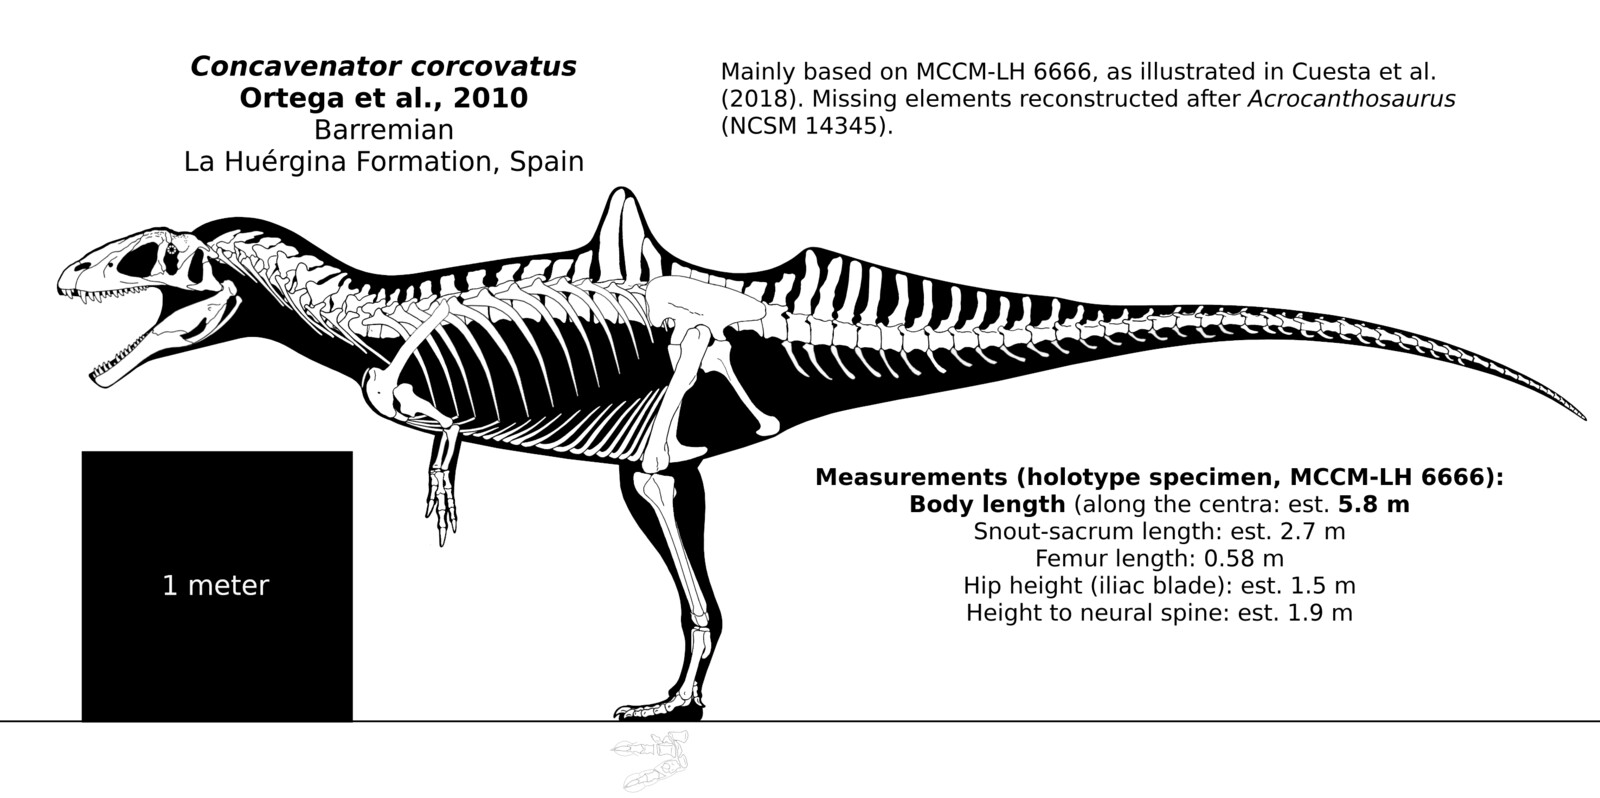 Concavenator corcovatus skeletal reconstruction.